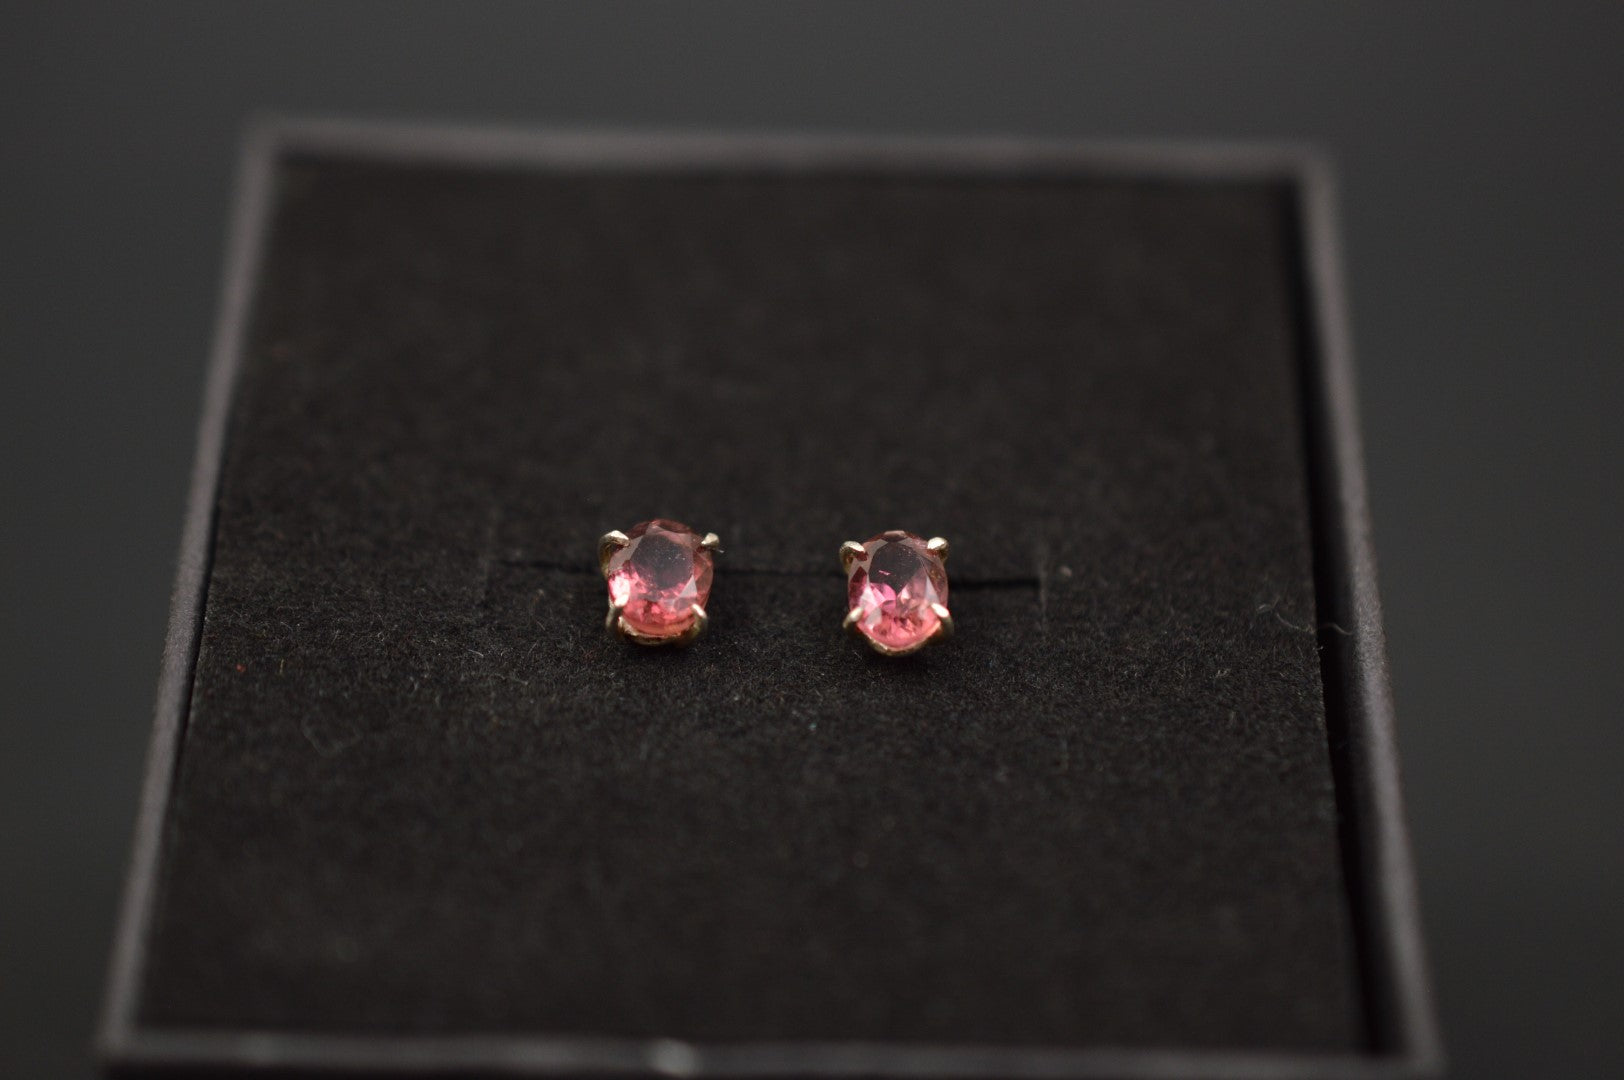  pink tourmaline sterling silver studs earrings